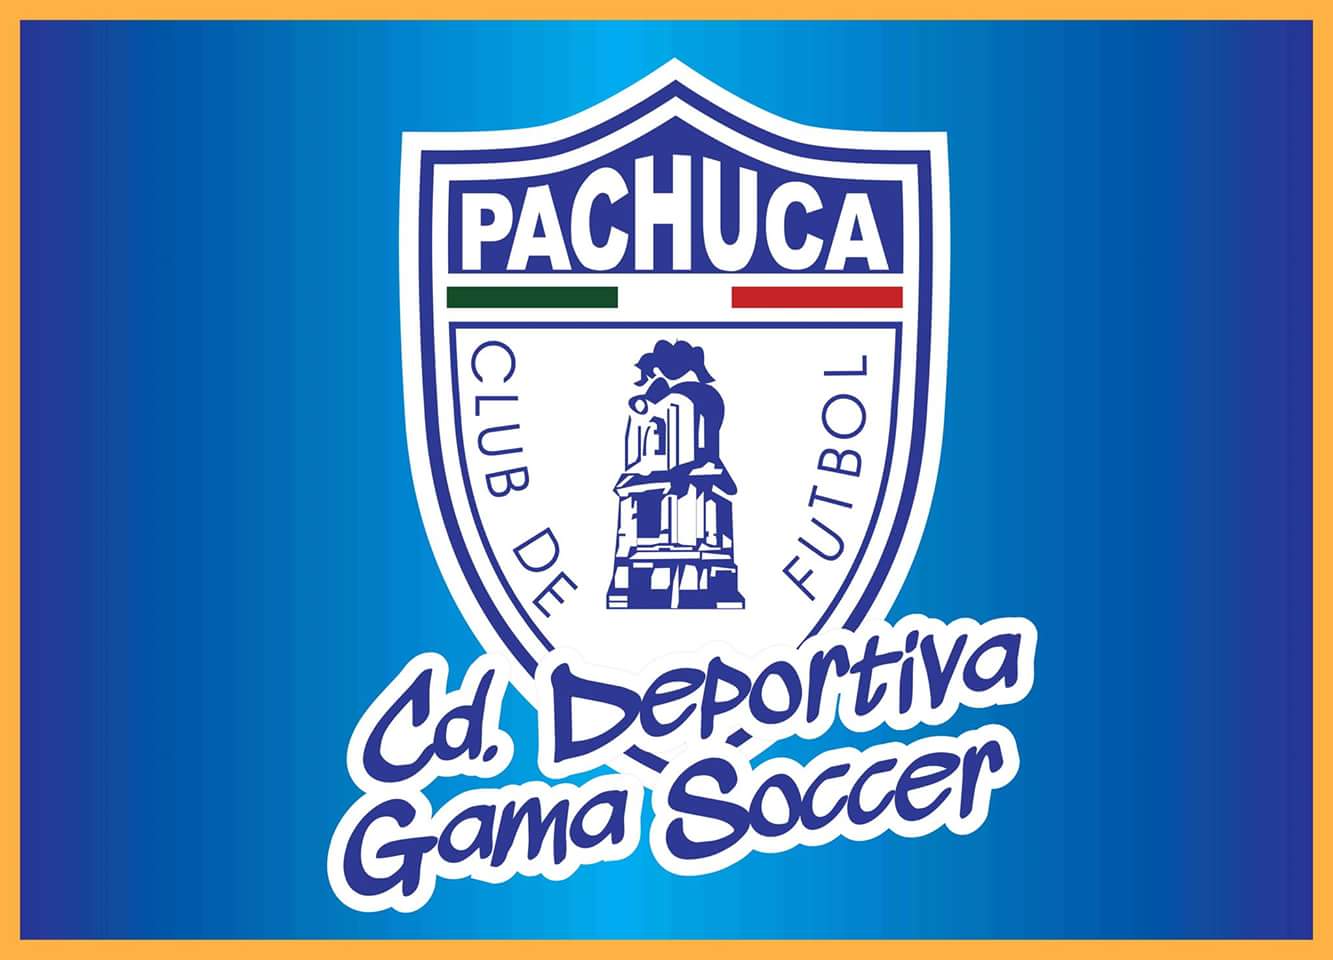 Pachuca Ciudad Deportiva Gama Soccer